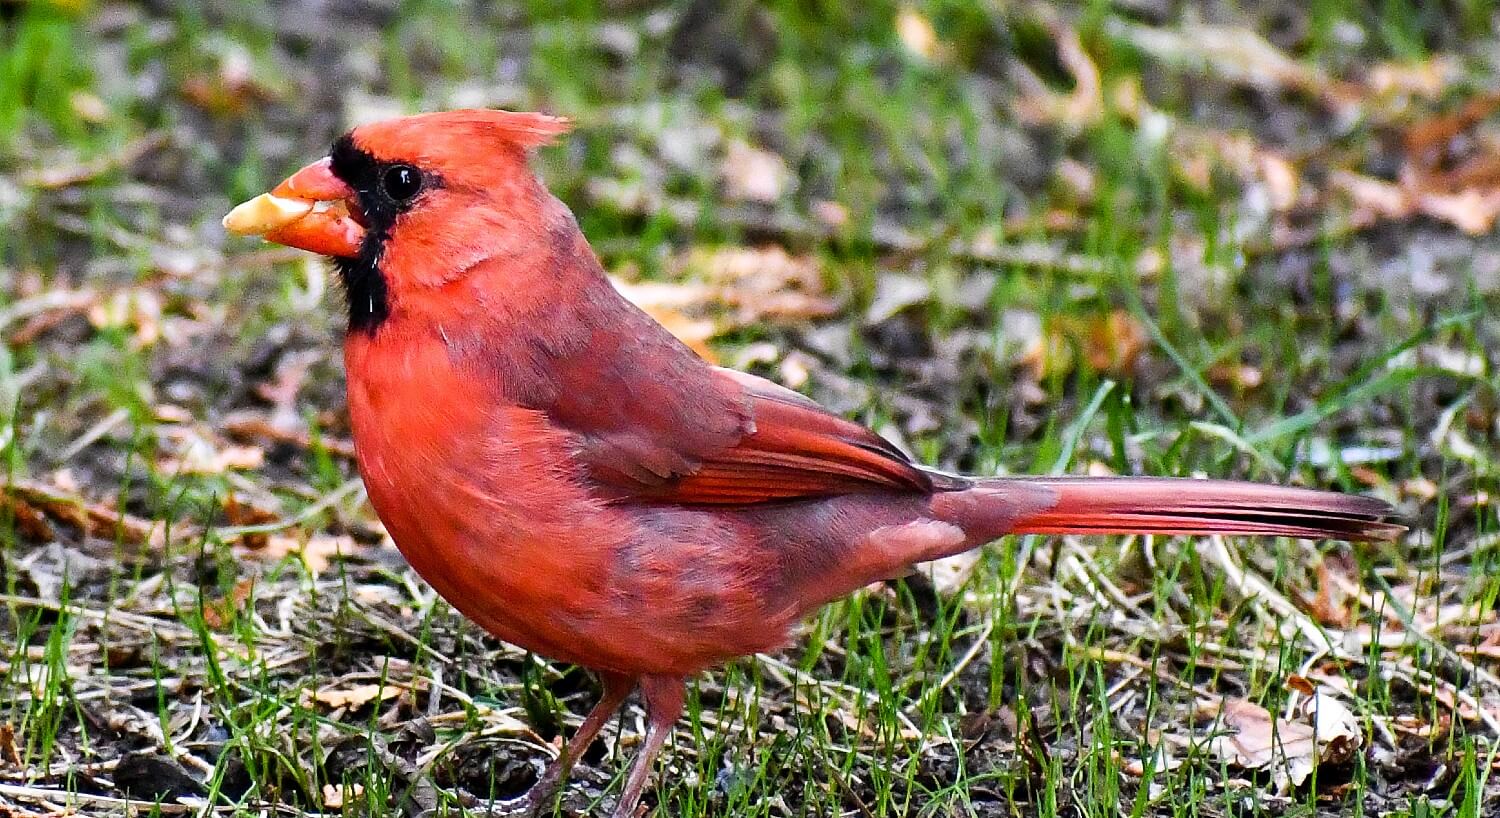 Beautiful bright red cardinal bird standing on the grass